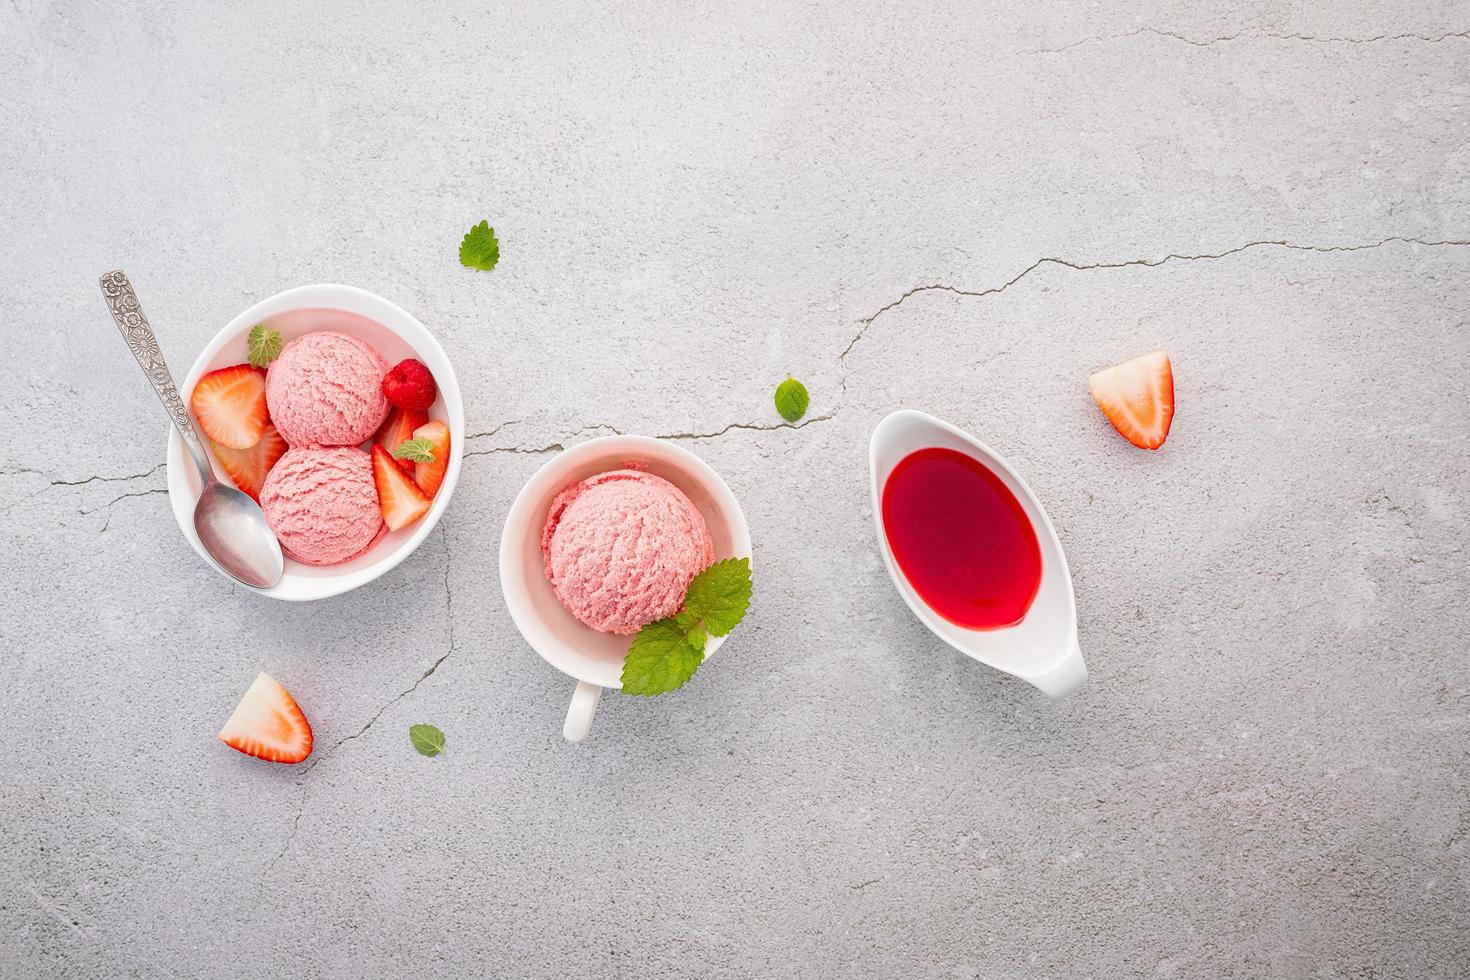 Strawberry ice cream flavour in white bowl photo